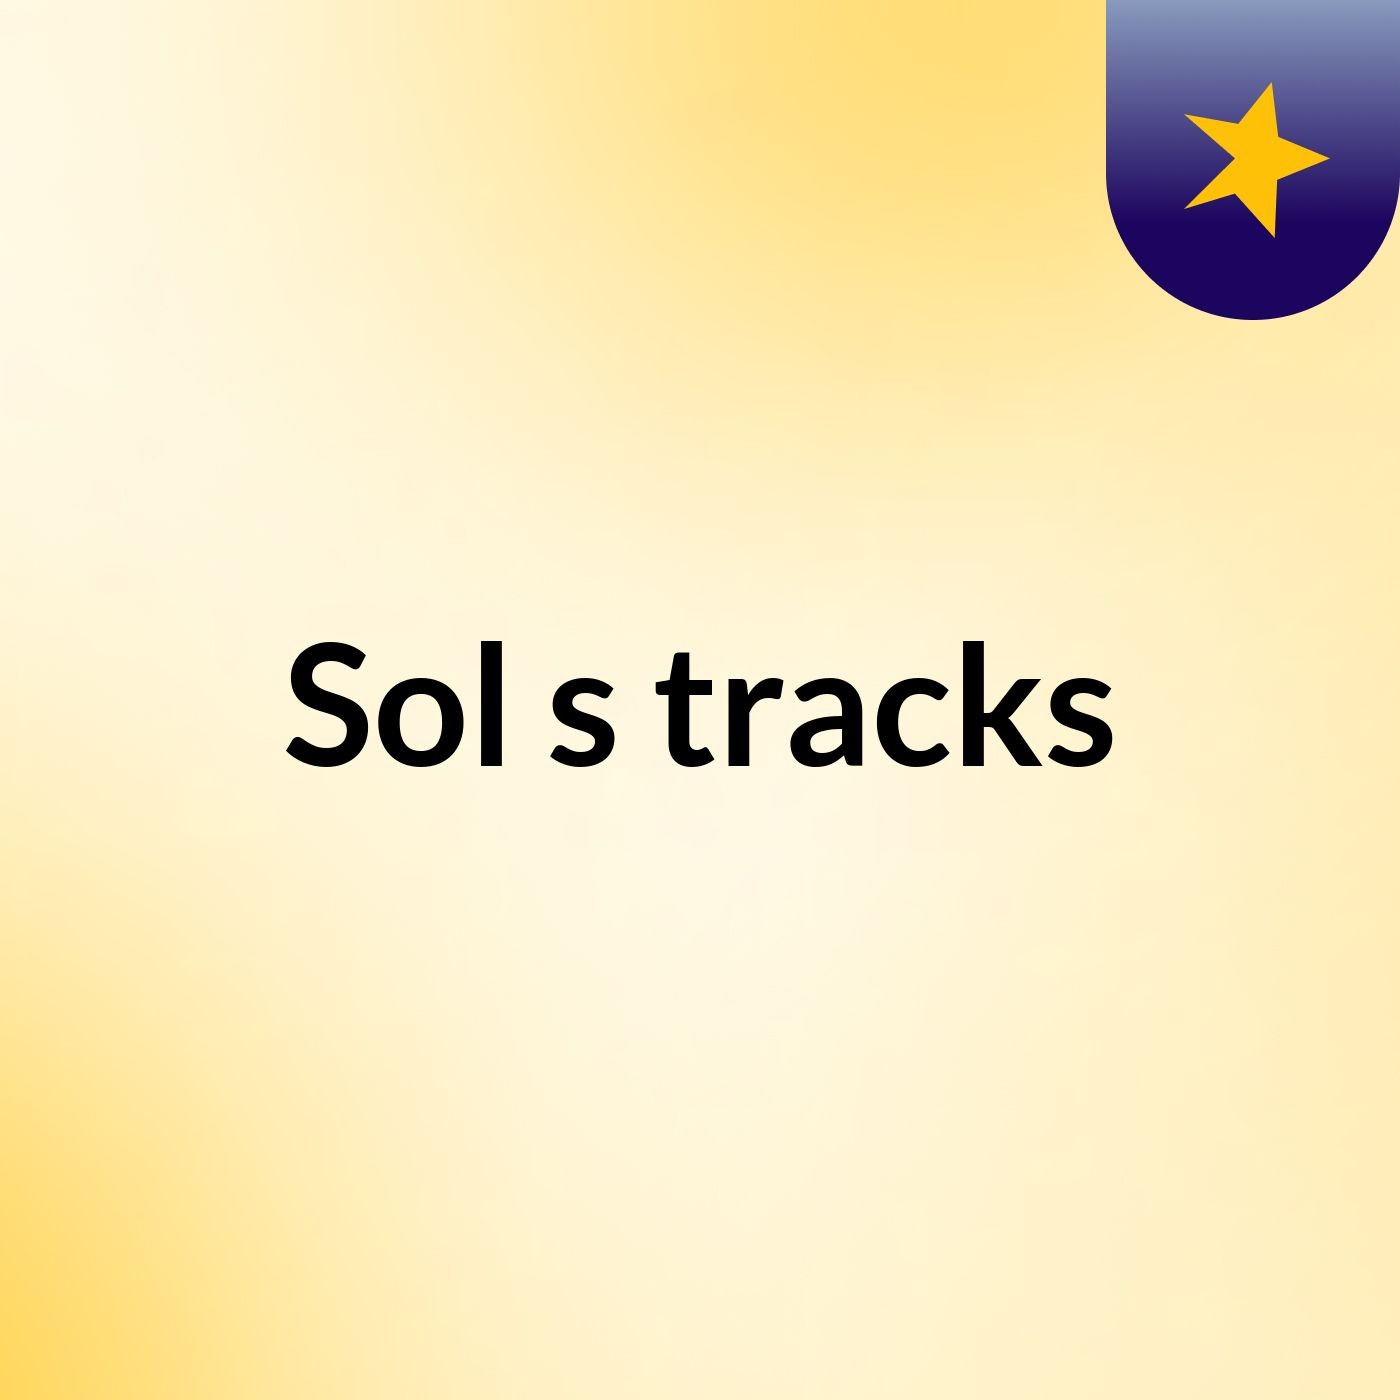 Sol's tracks